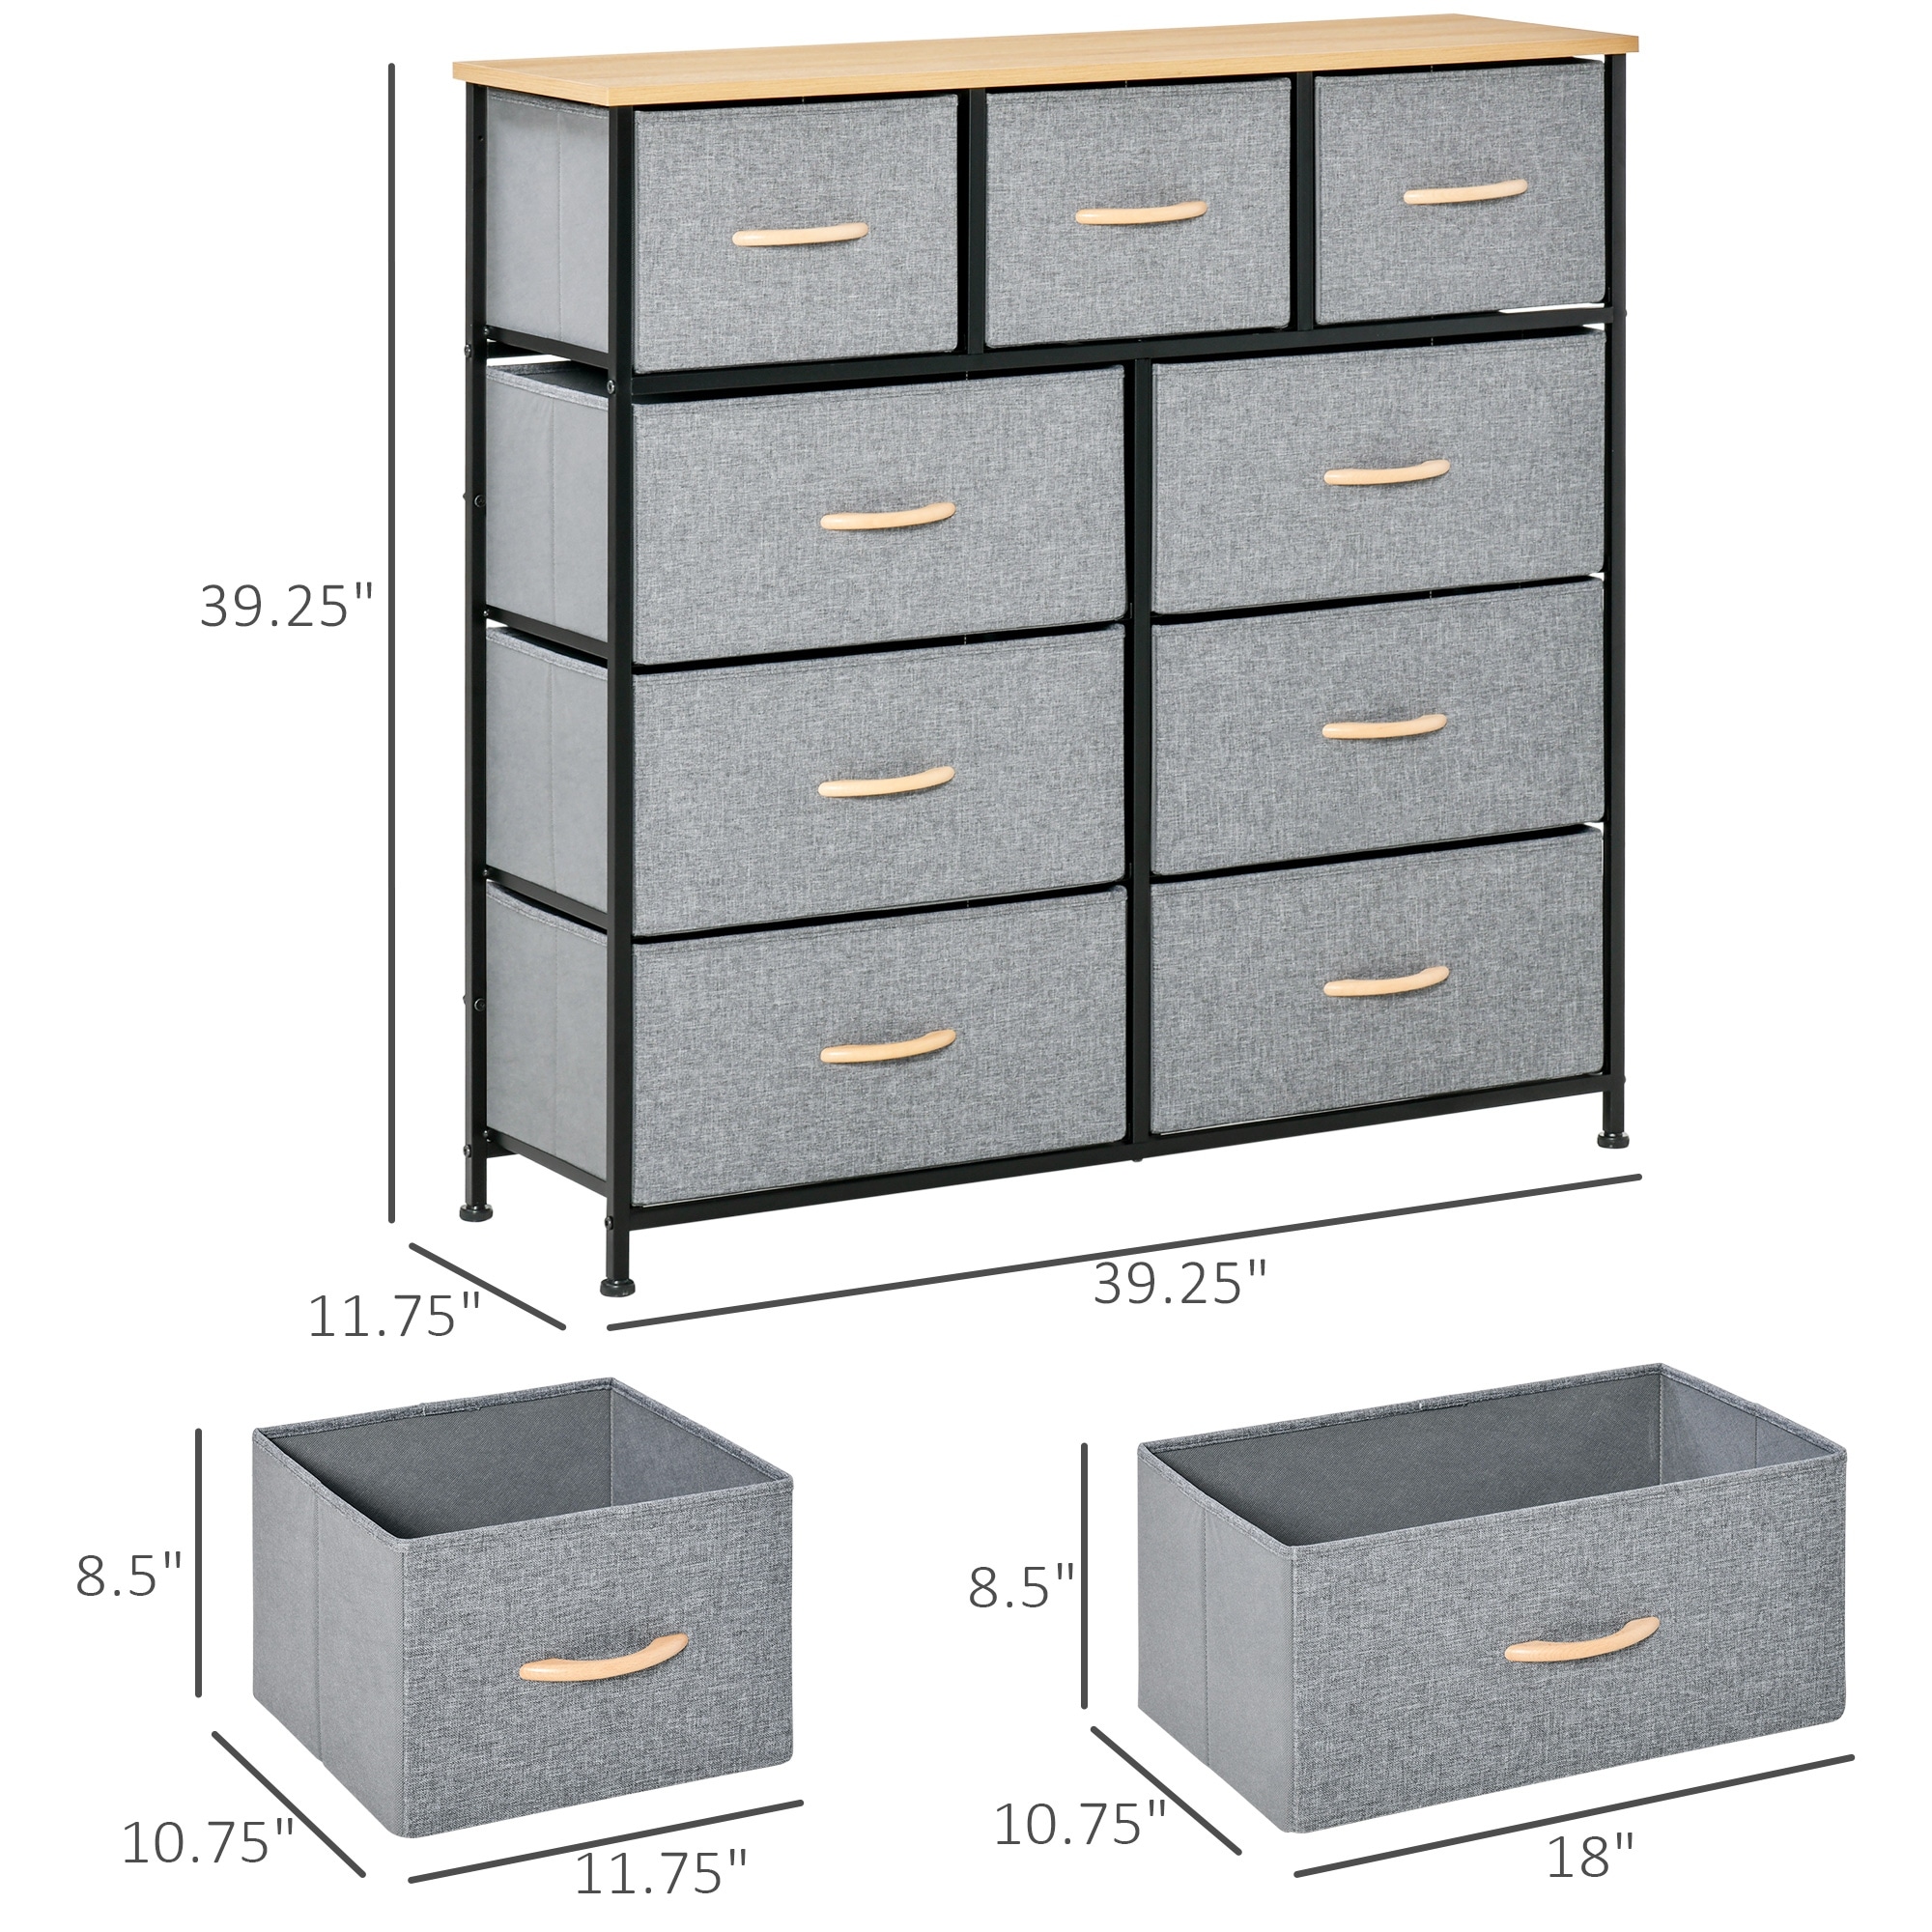 https://ak1.ostkcdn.com/images/products/is/images/direct/5947551da817d3b6a789704724338a63143346f6/HOMCOM-9-Drawers-Storage-Chest-Dresser-Organizer-Unit-w--Steel-Frame%2C-Wood-Top%2C-Easy-Pull-Fabric-Bins%2C-for-Bedroom%2C-Hallway.jpg